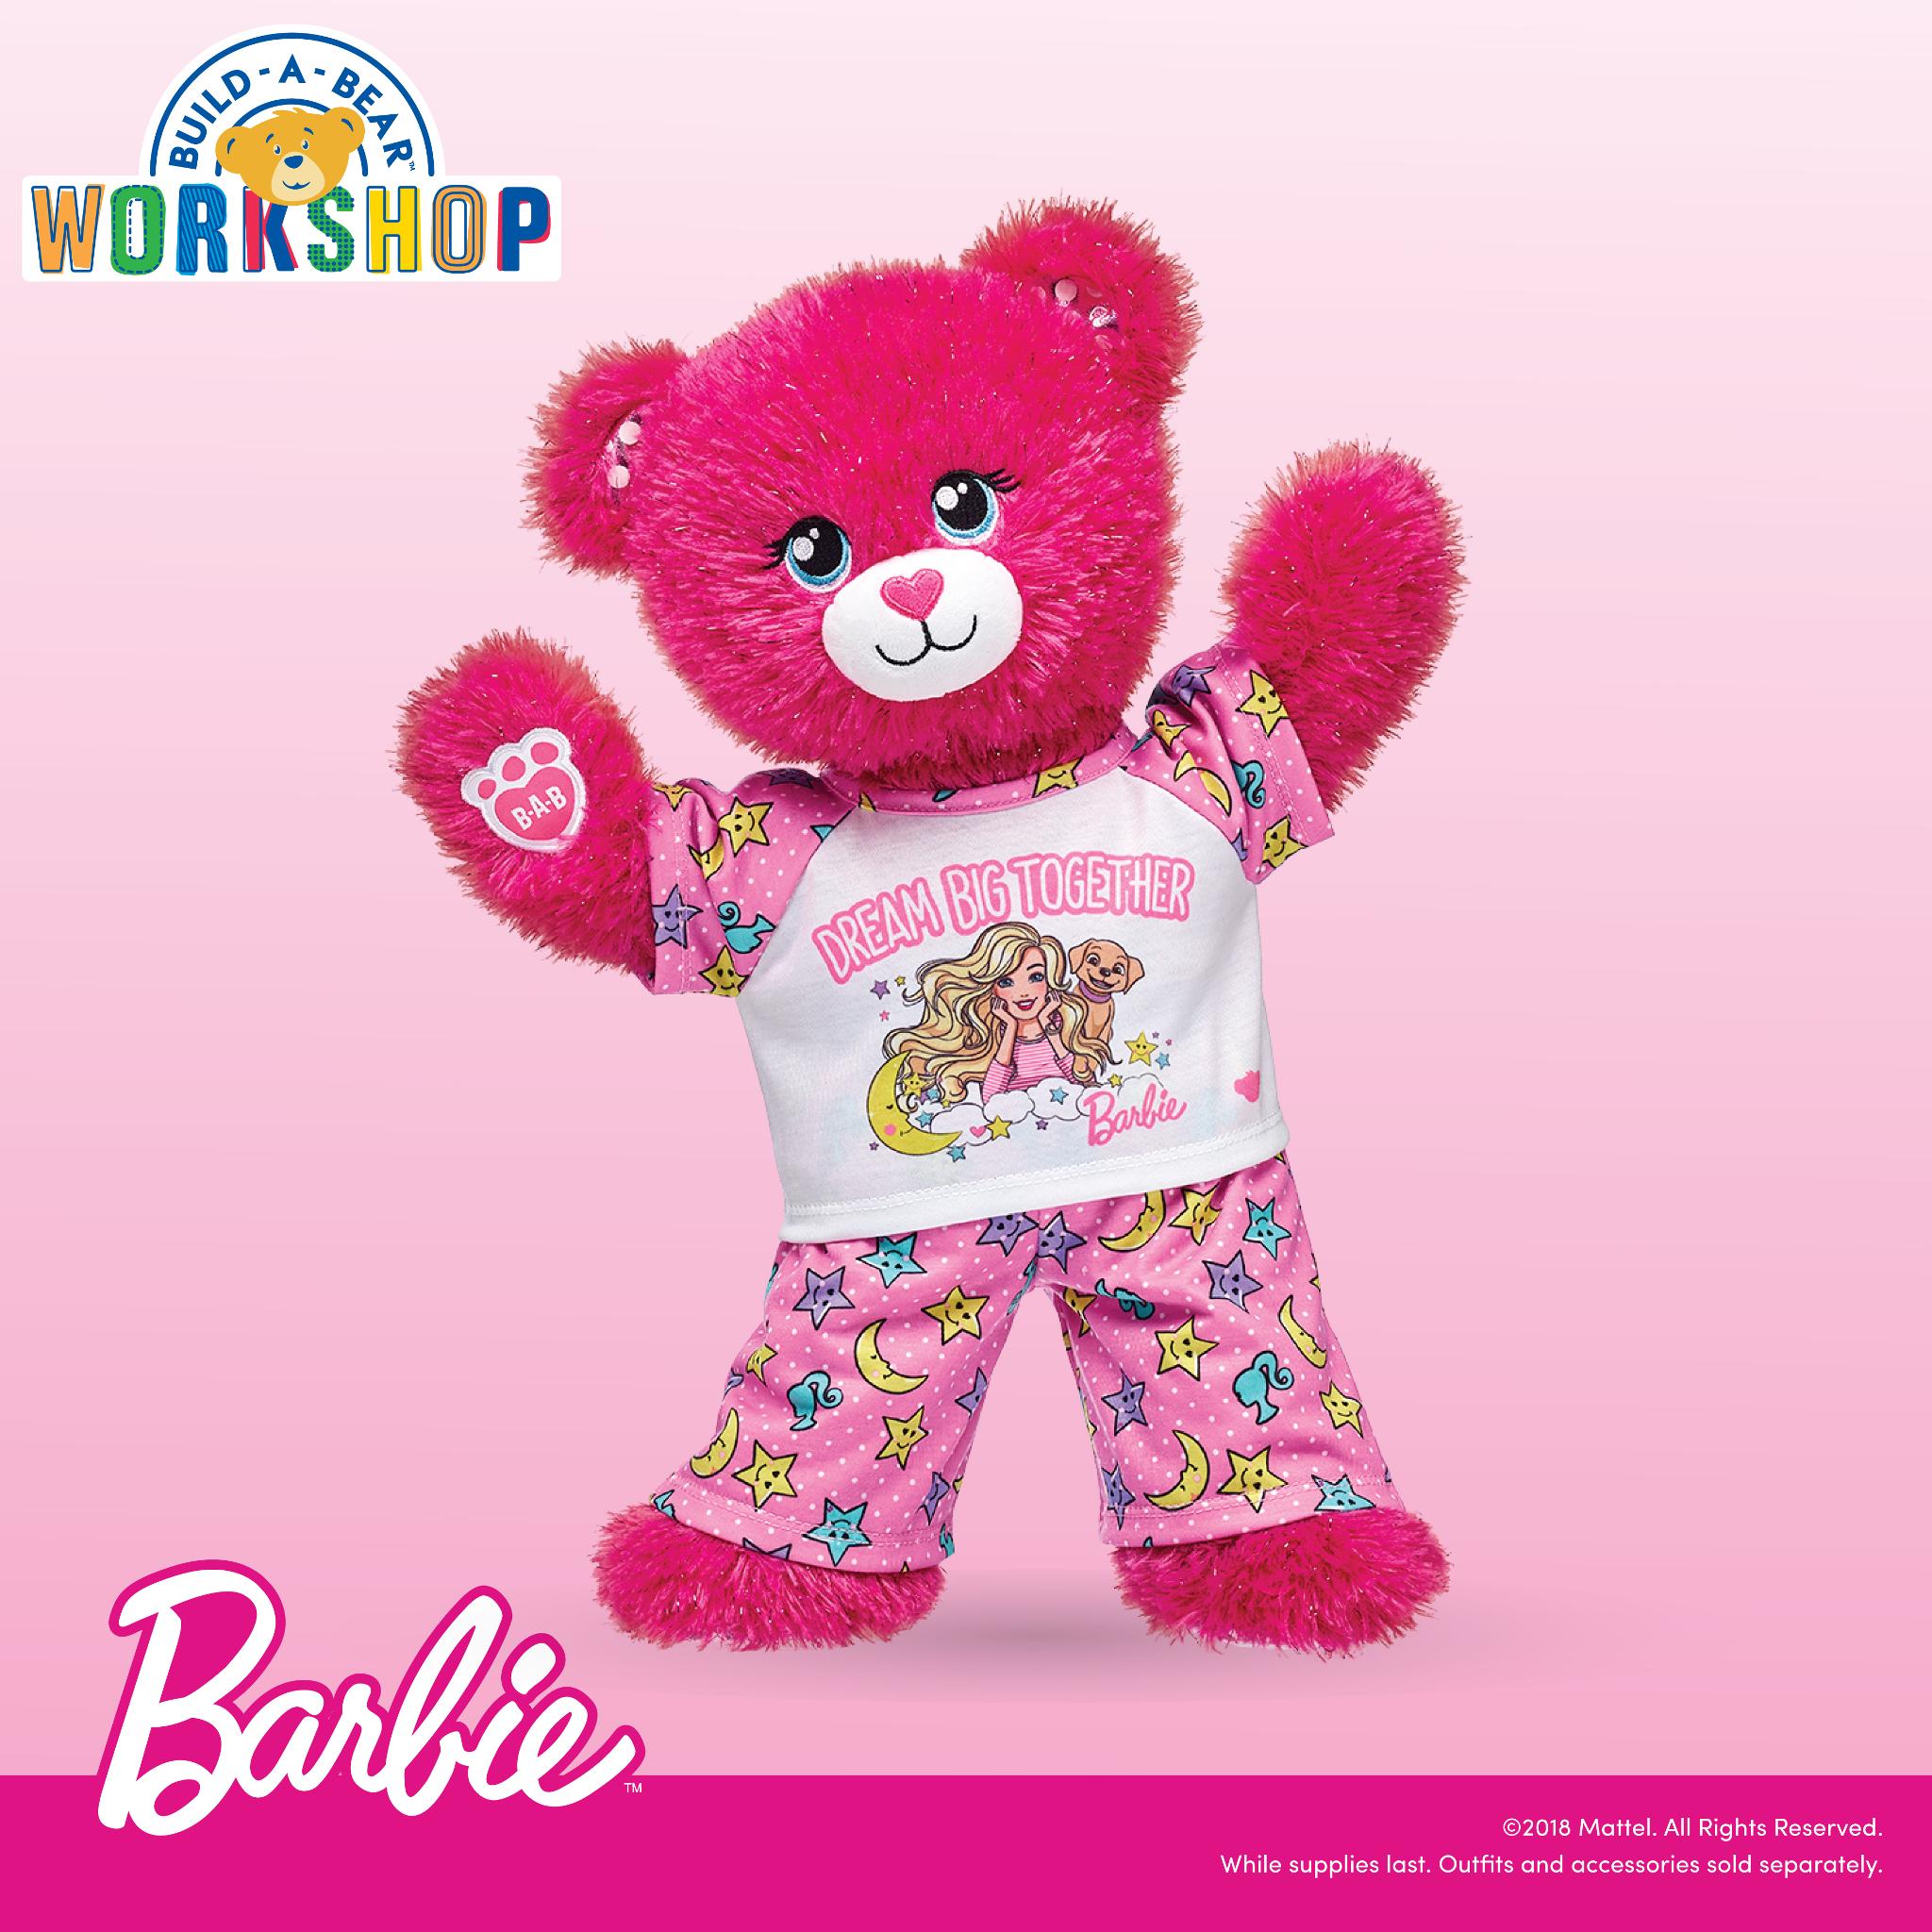 Barbie, Build-A-Bear partnership gives fans chance for plush keepsake